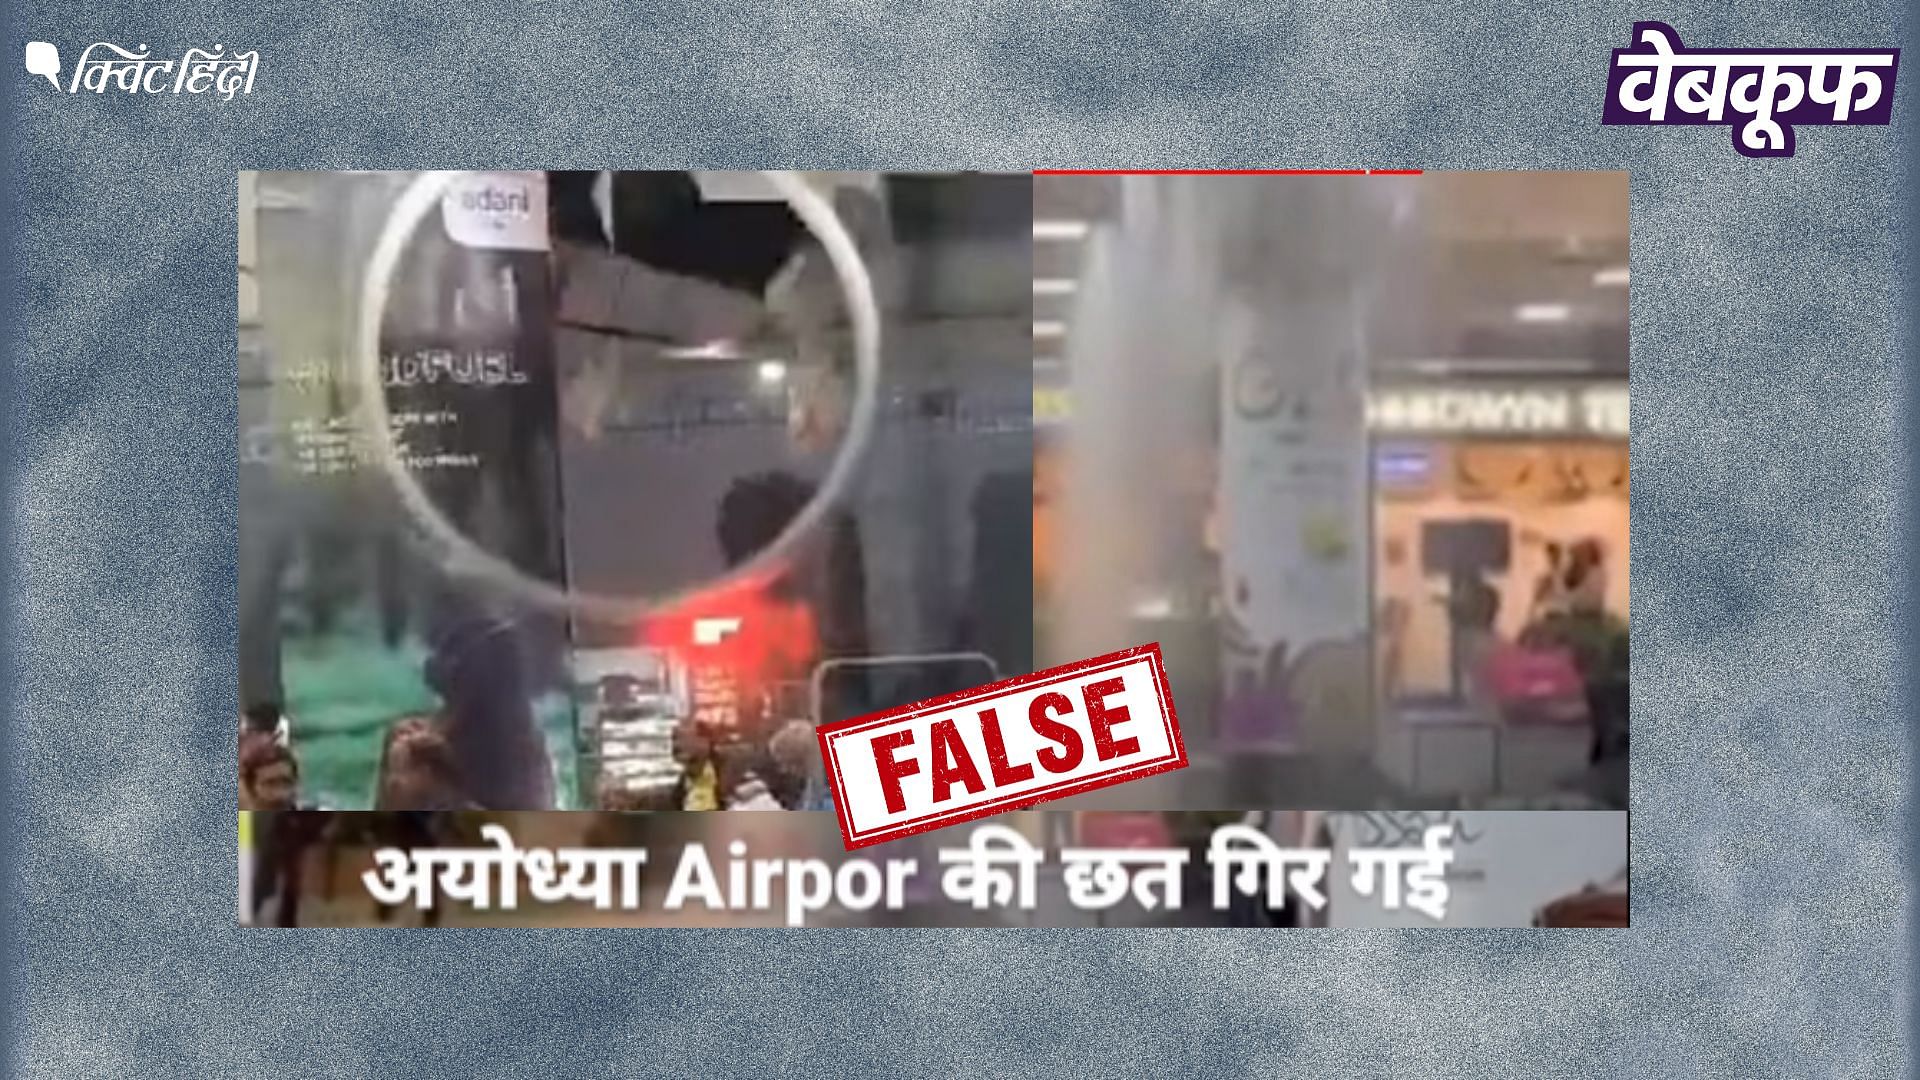 <div class="paragraphs"><p>गुवाहाटी एयरपोर्ट की छत गिरने का वीडियो अयोध्या का बताकर वायरल</p></div>